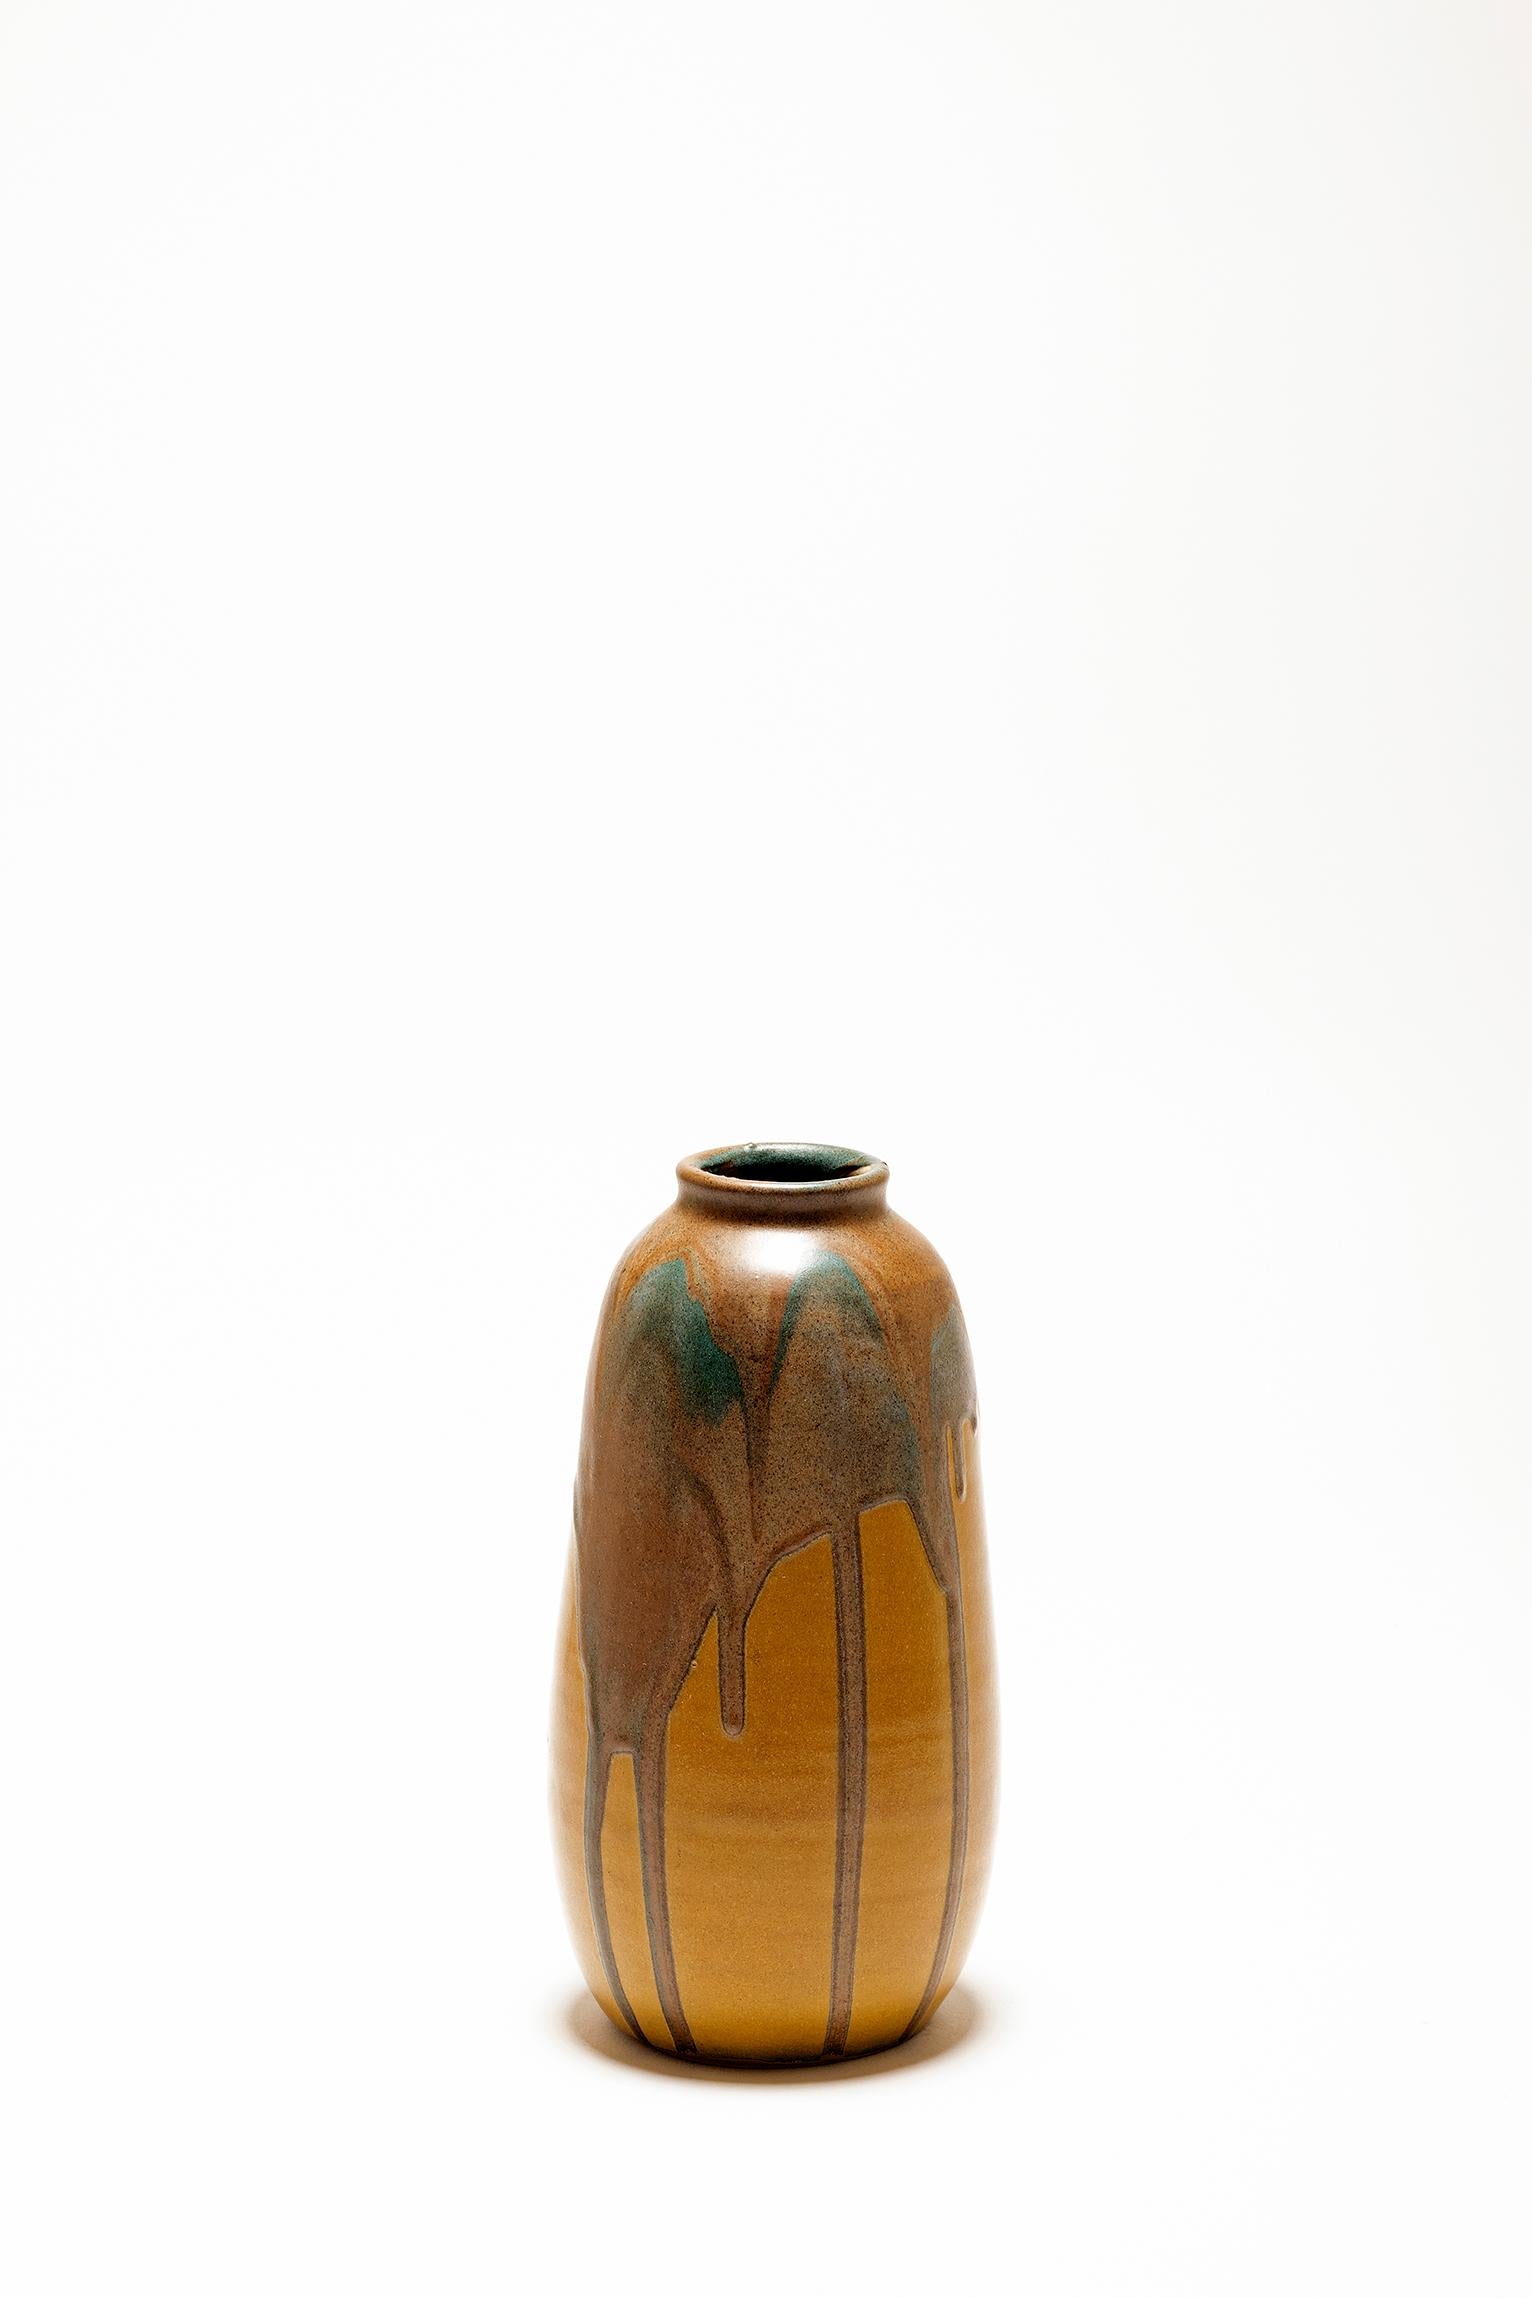 An Art Deco polychrome glazed ceramic vase by Leon Pointu (1879-1942)
France, circa 1920.
 